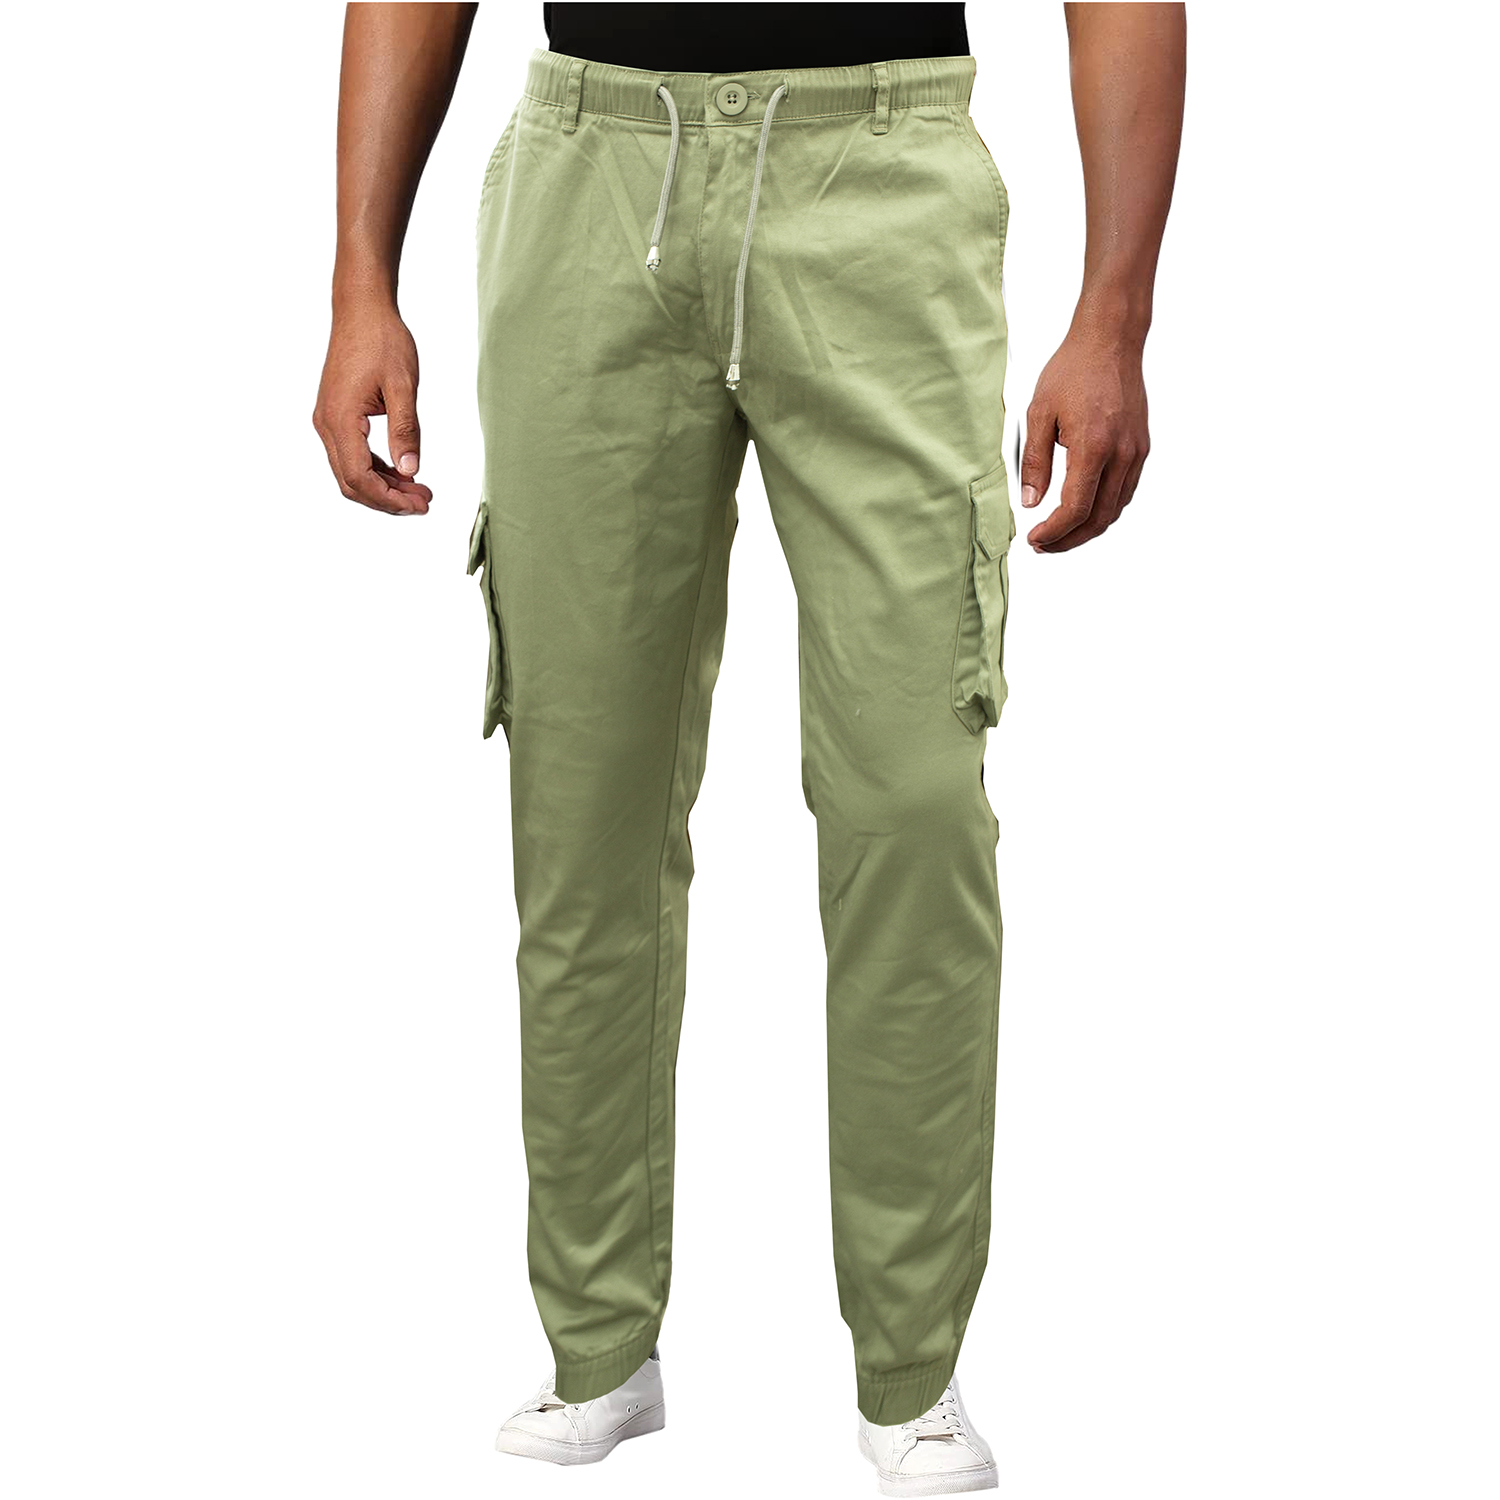 Buy Warburg Men's Solid Regular Fit Cargo Pants Light Green at Amazon.in